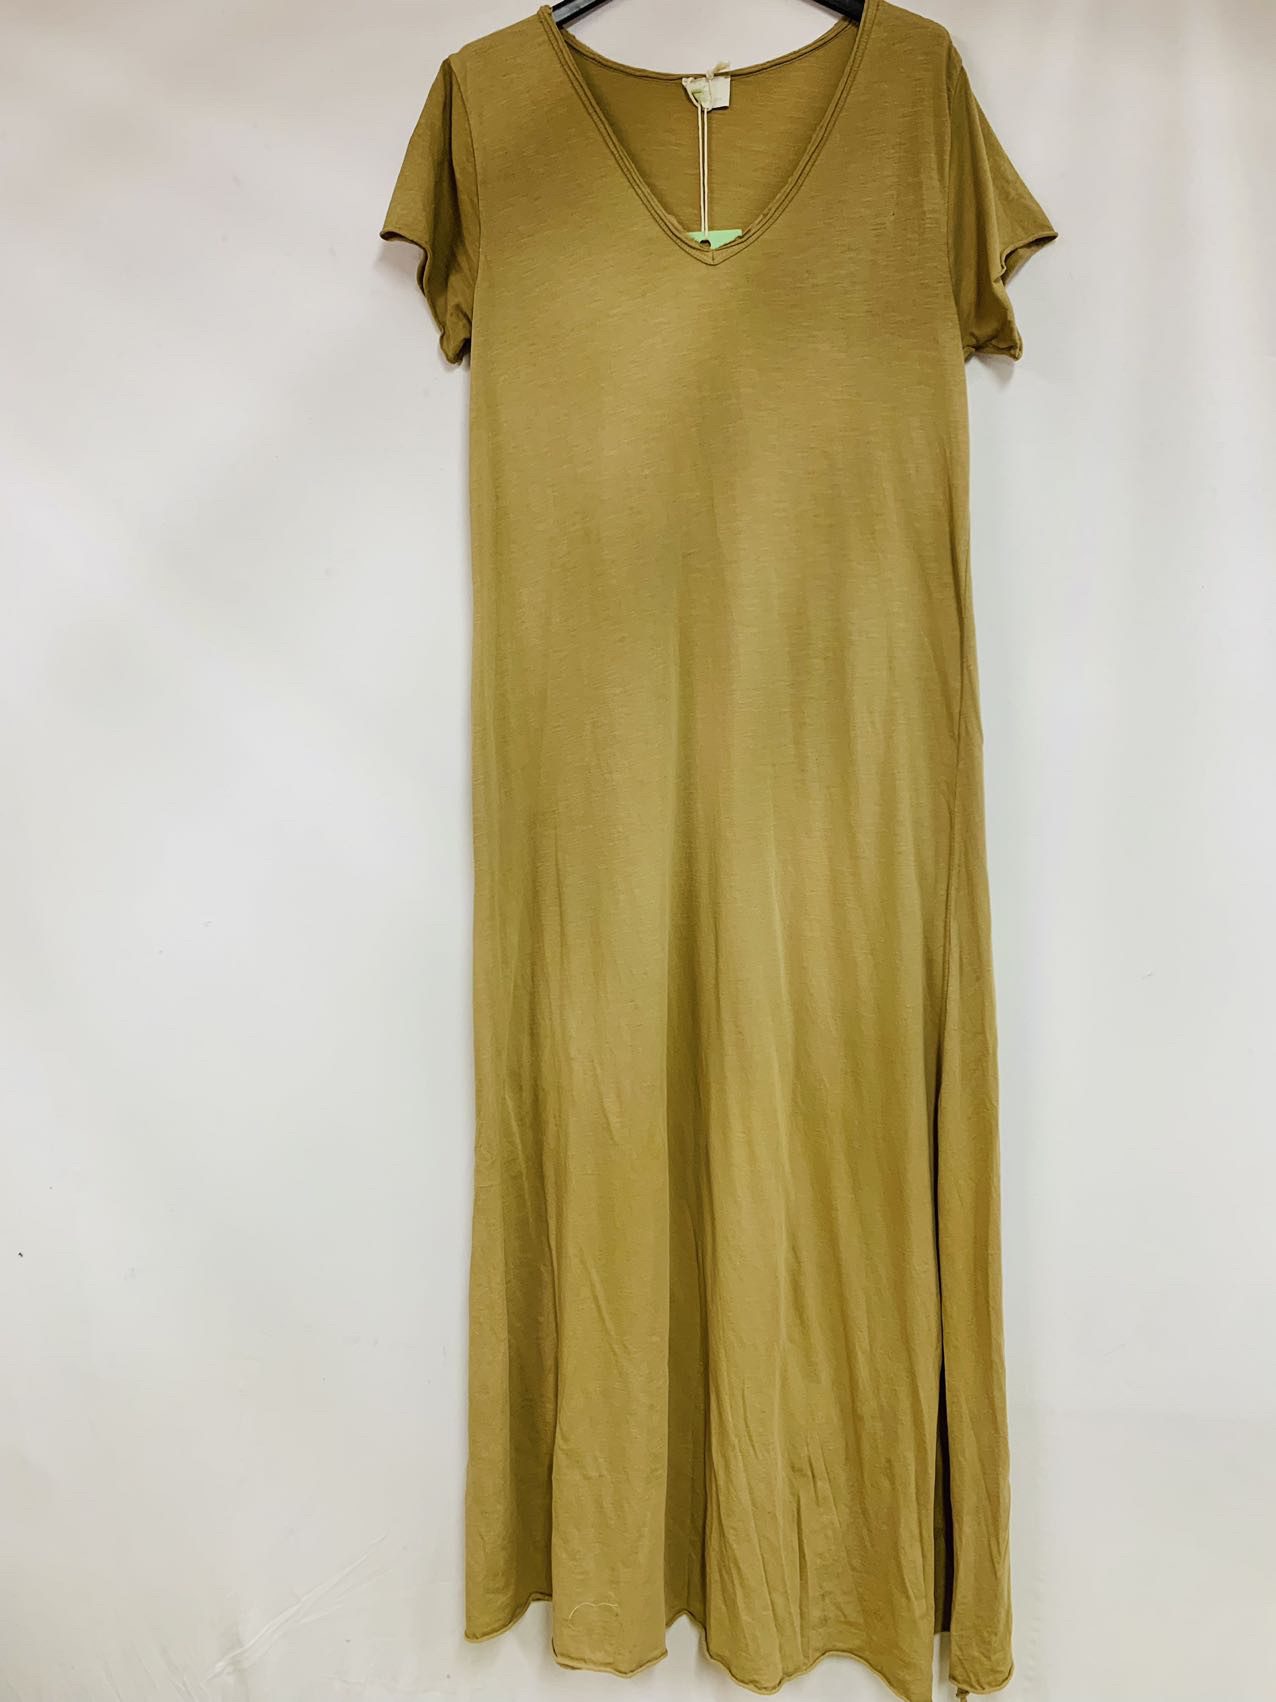 Katoenen maxi jurk met slipt - Franse mode vintage jurk - kleur CAMEL - maat 38/40